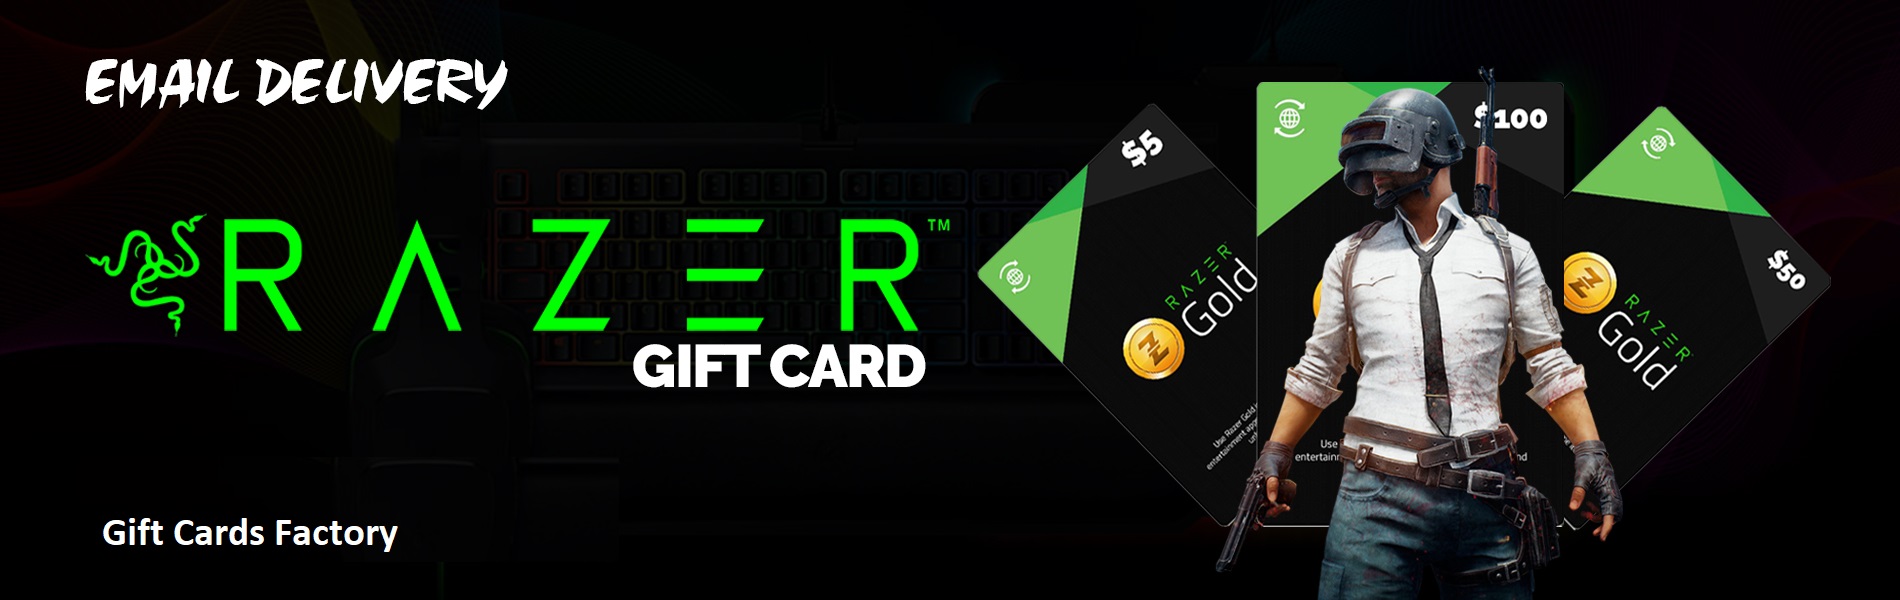 Razer-Gift-Card-Banner